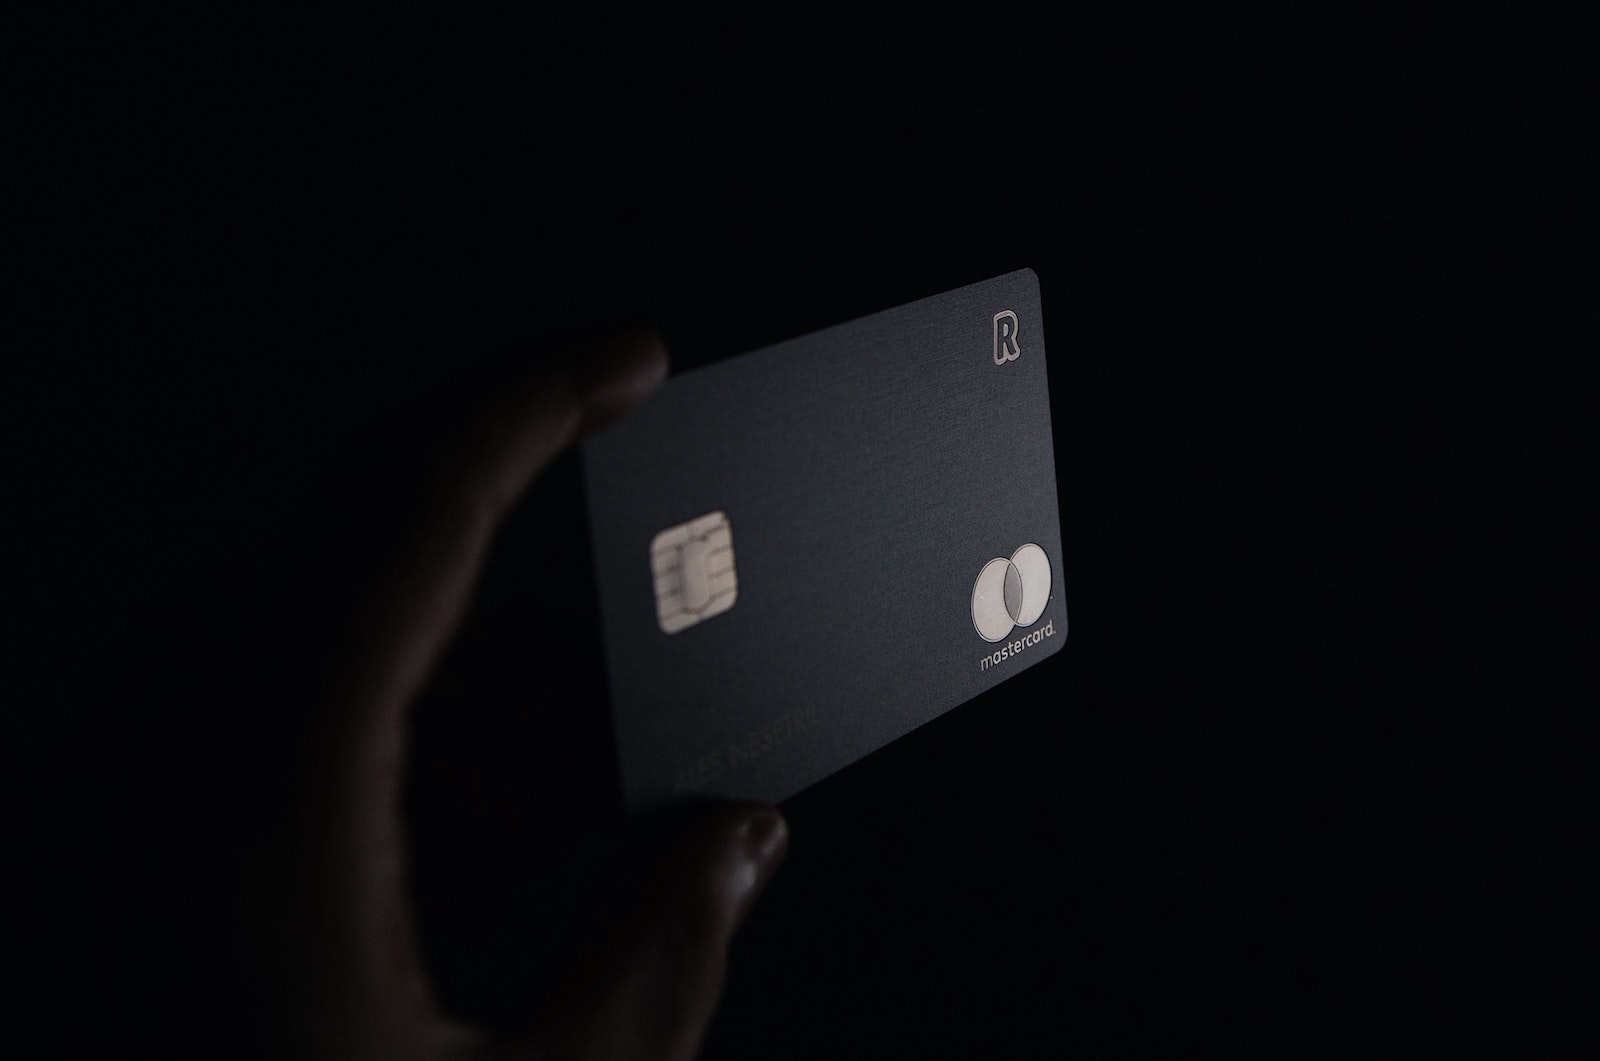 black debit or credit card